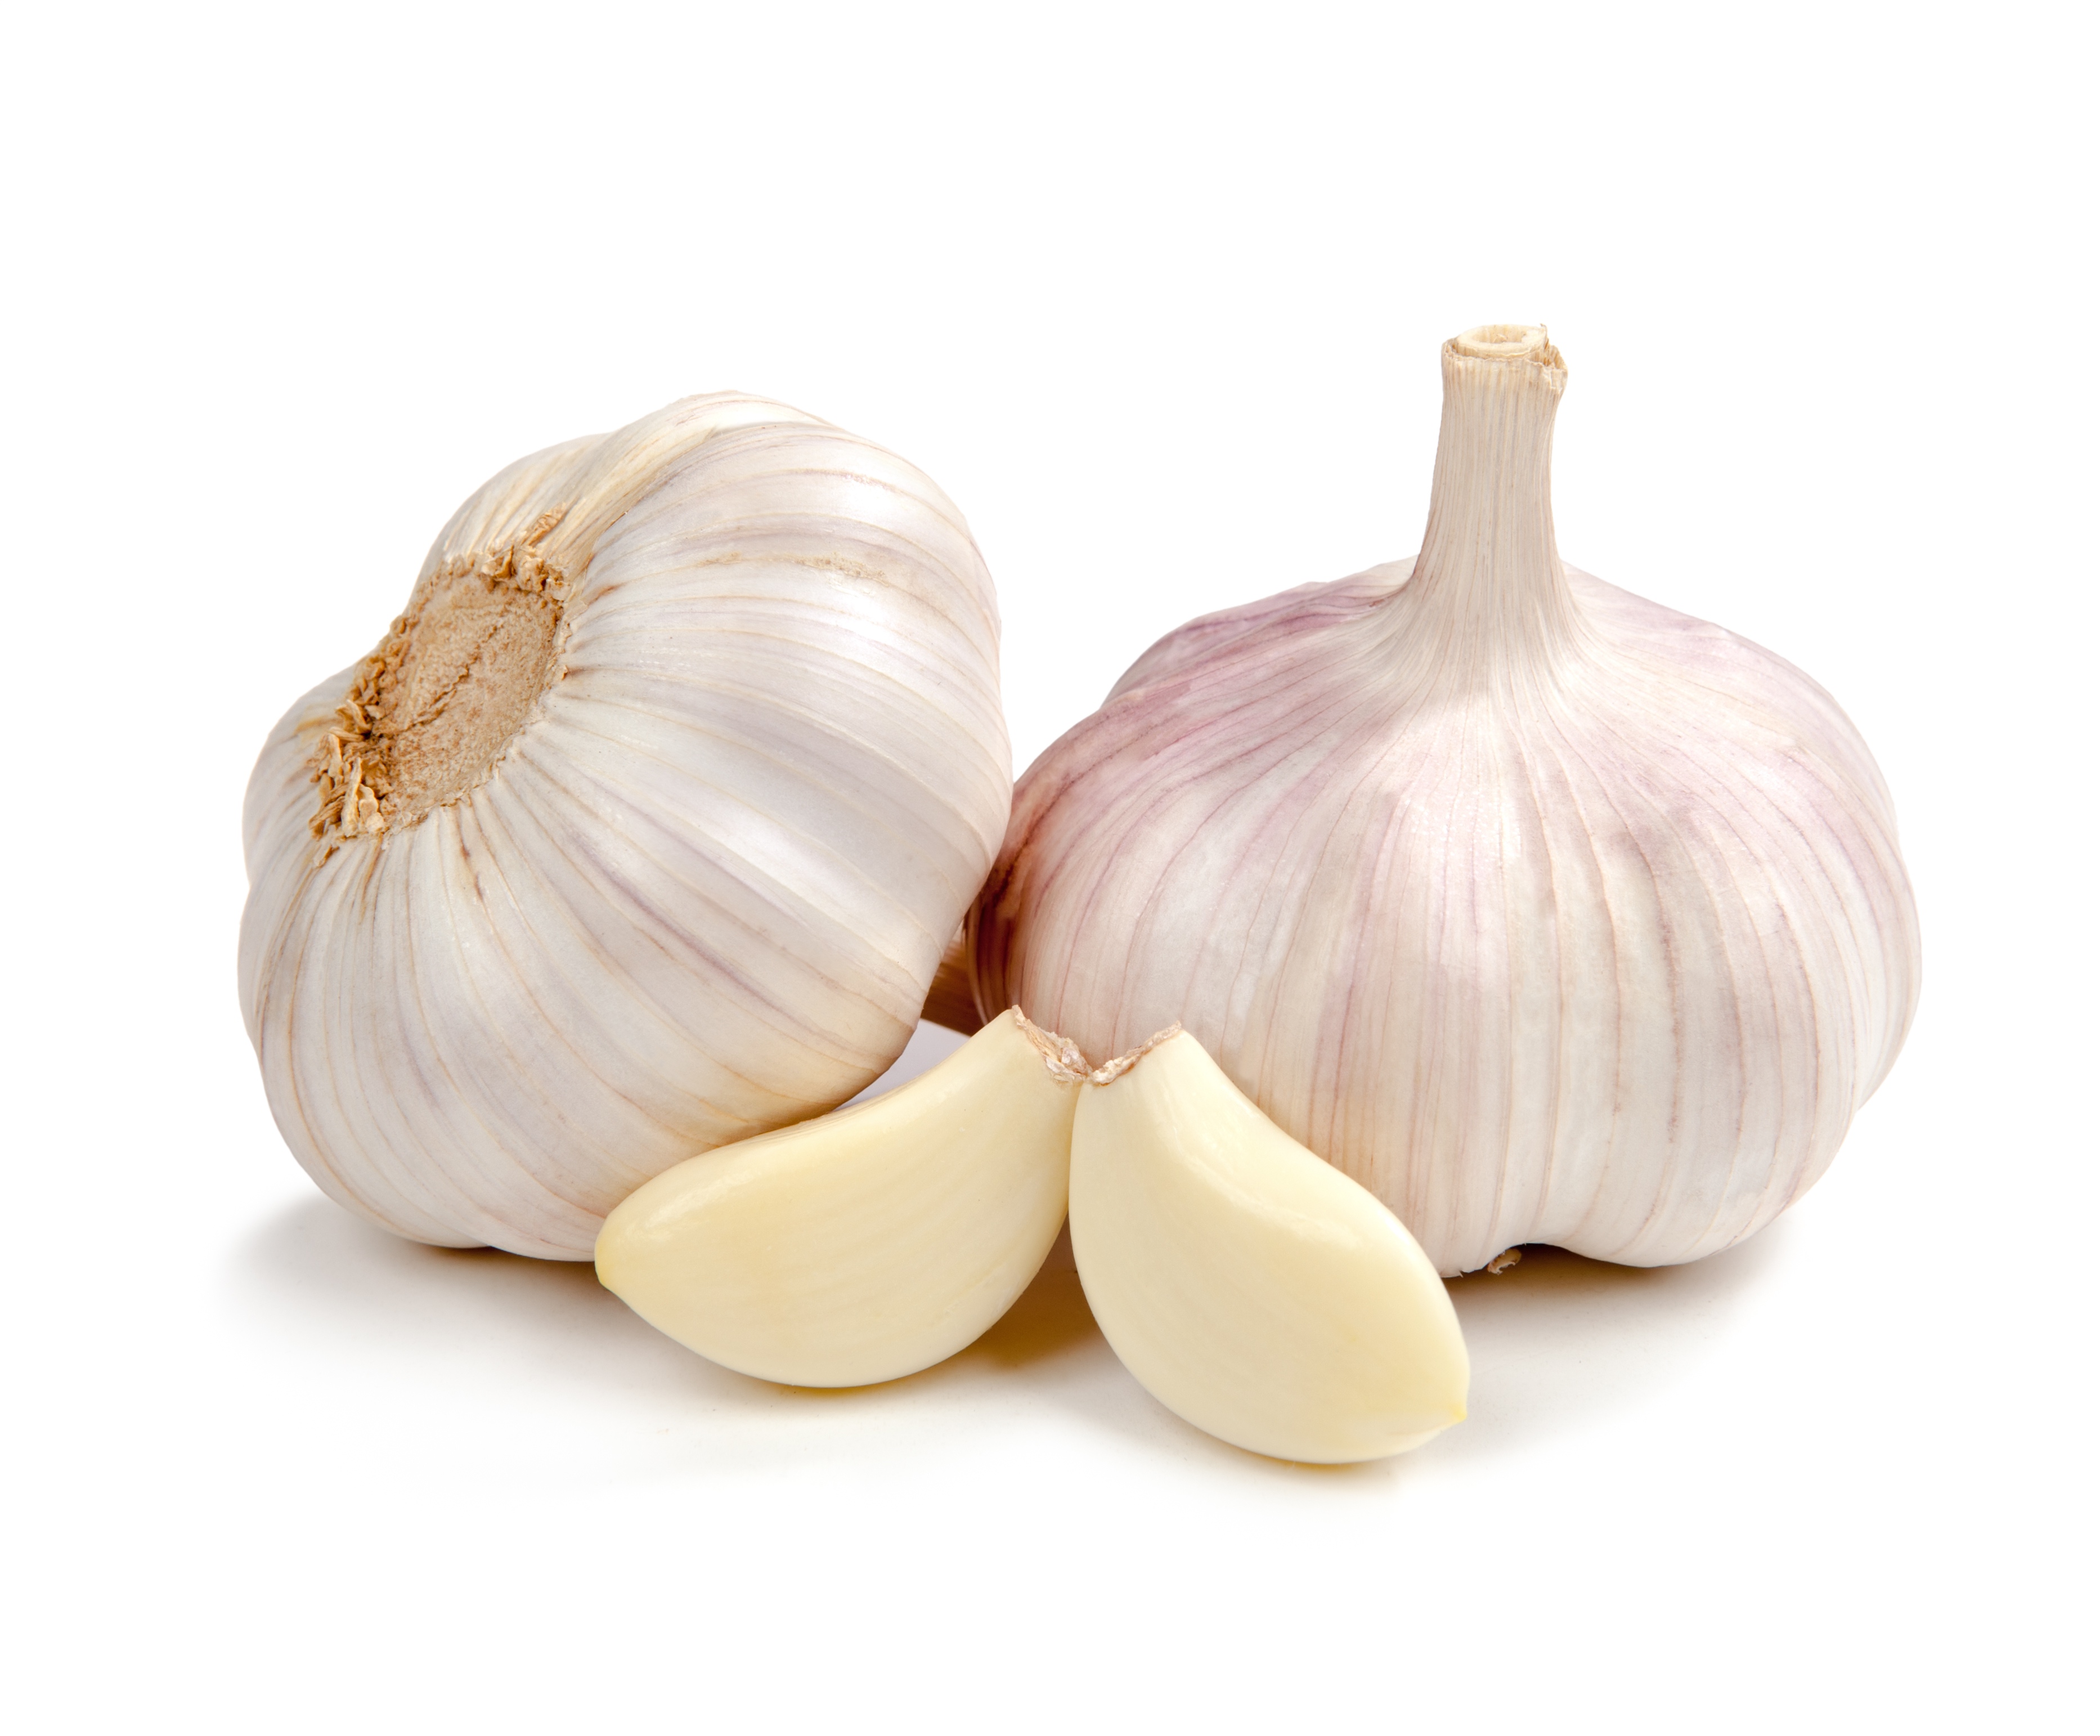 Garlic not getting good market value